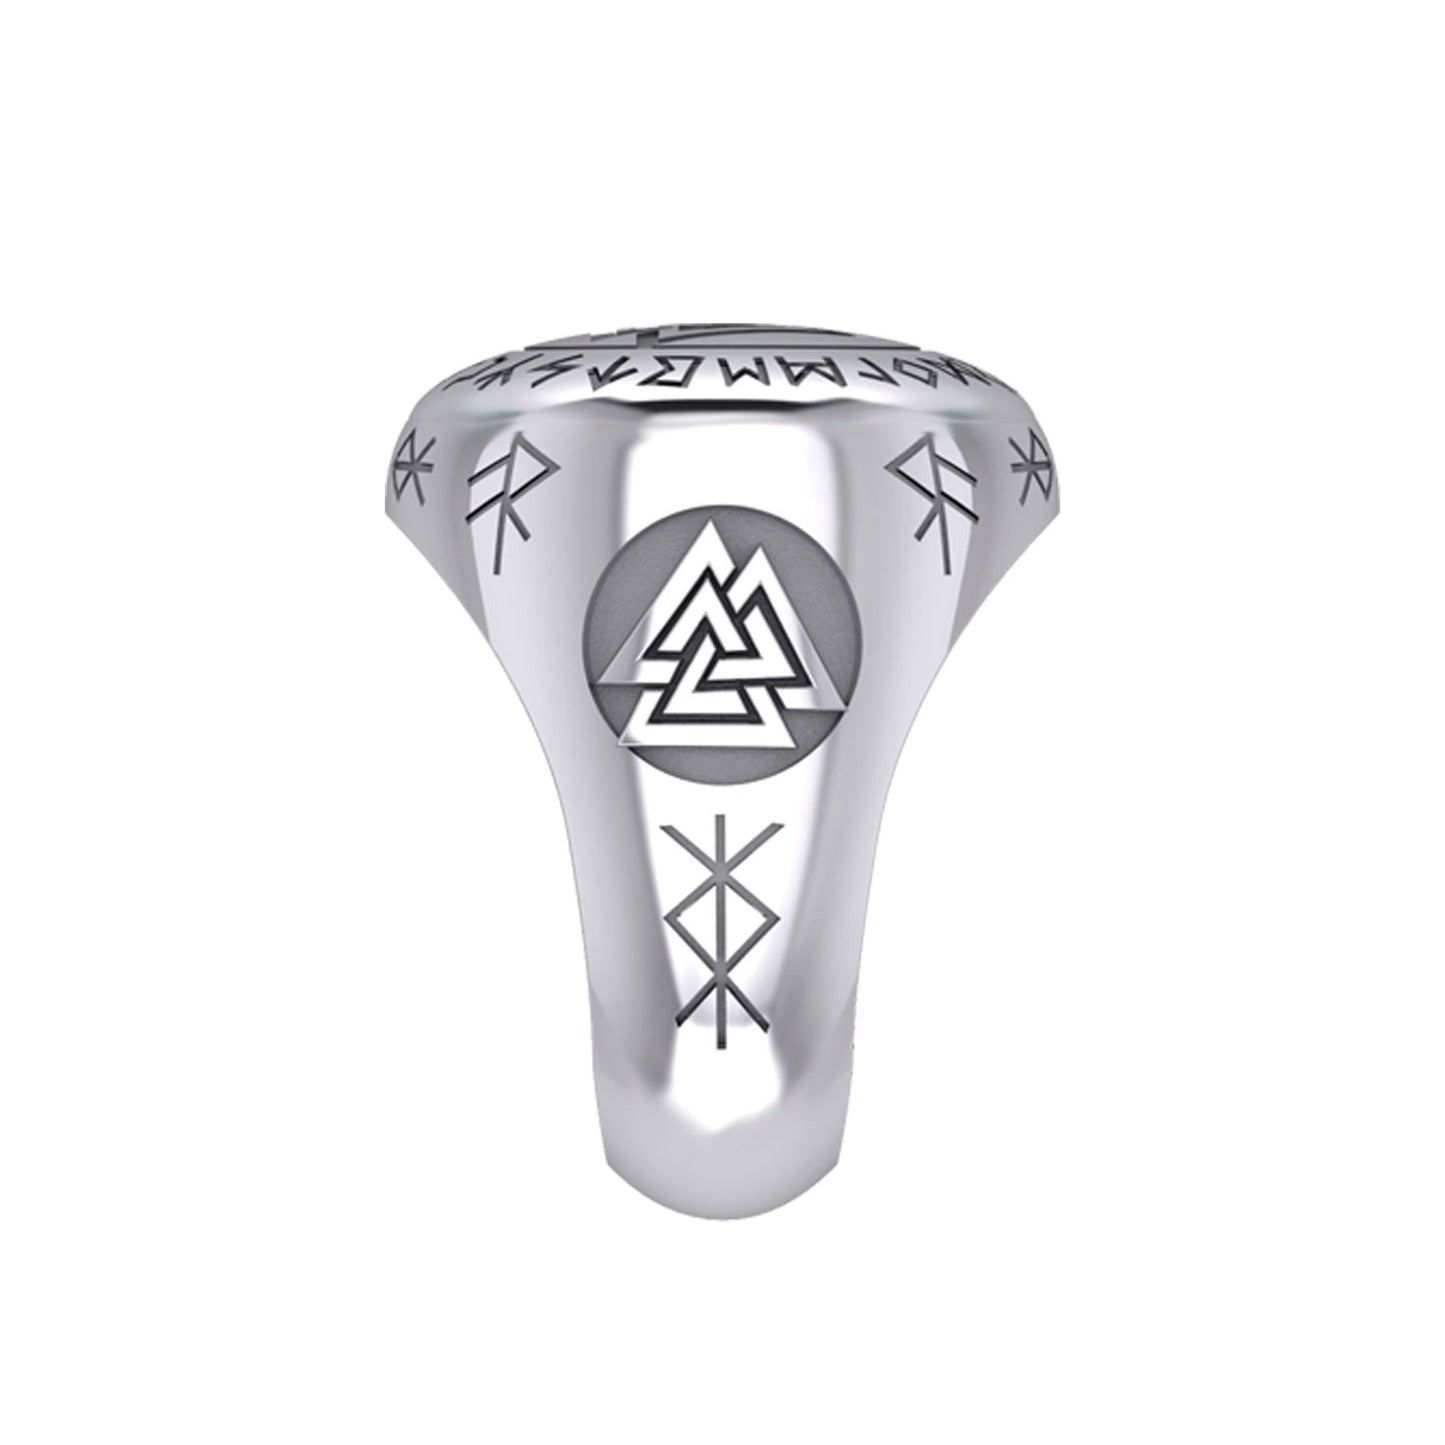 Norse Viking Valknut Silver Ring with Rune Symbols TRI2413